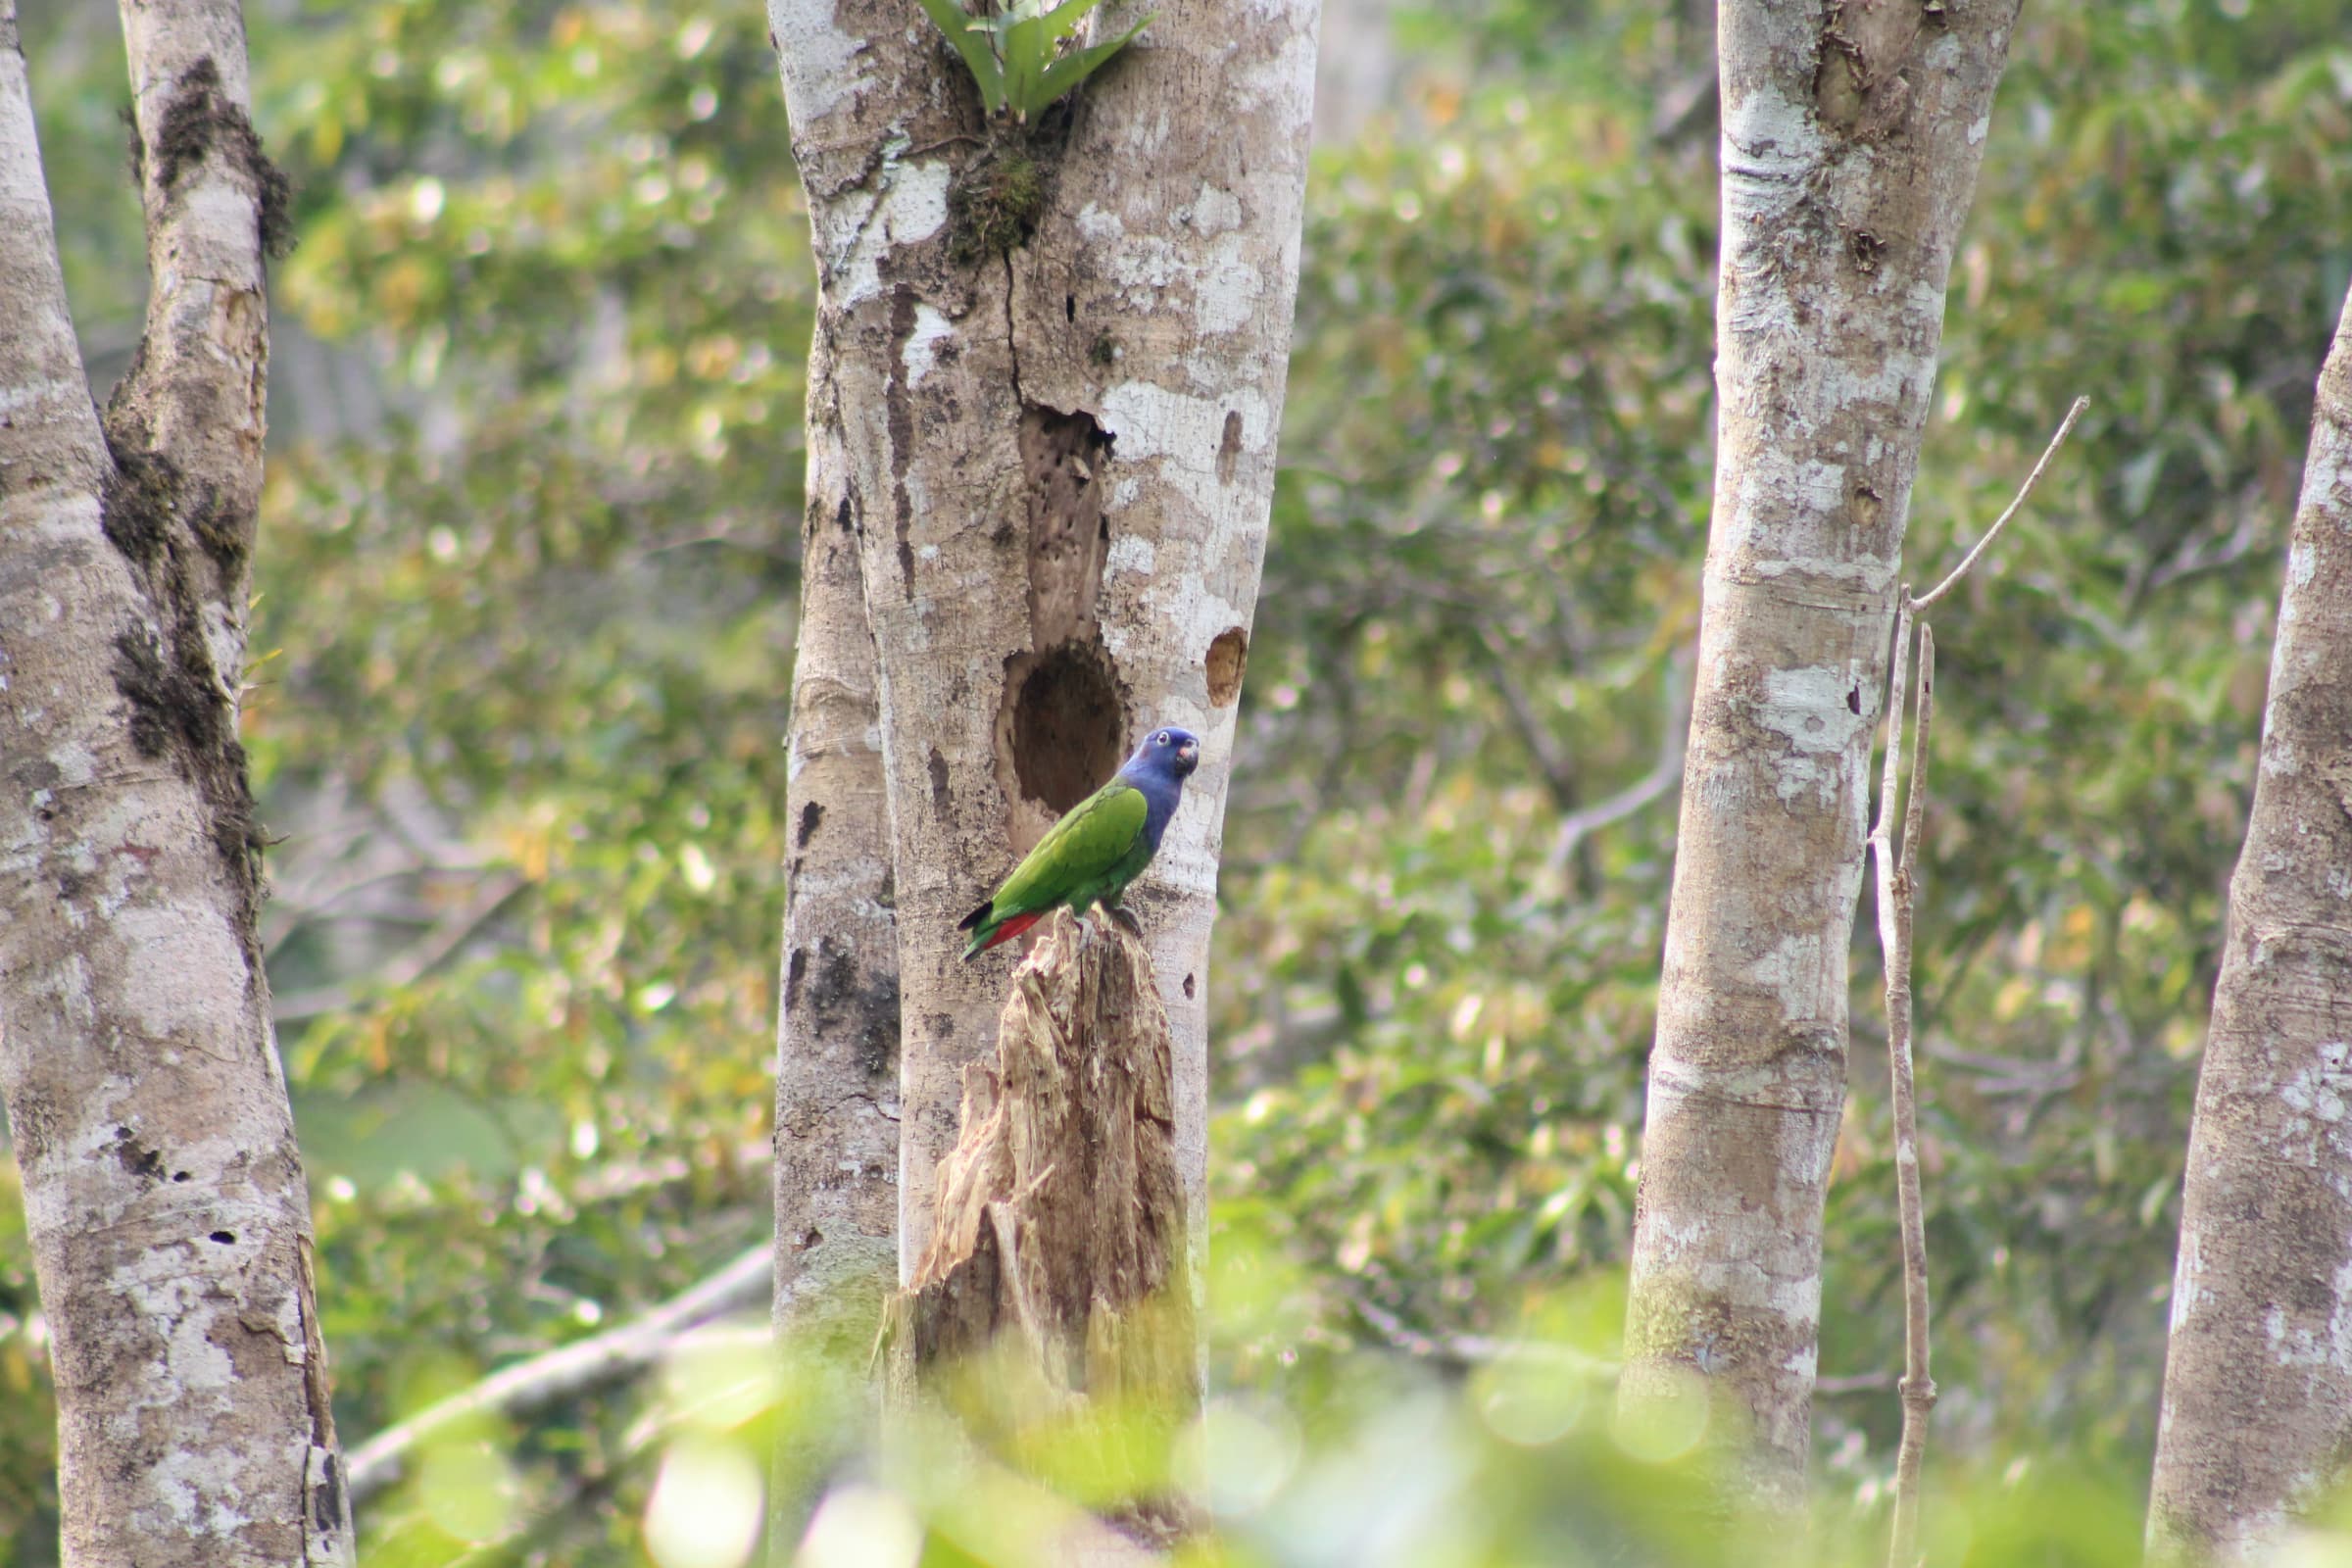 Blue headed parrot nest in Dendropanax arboreus